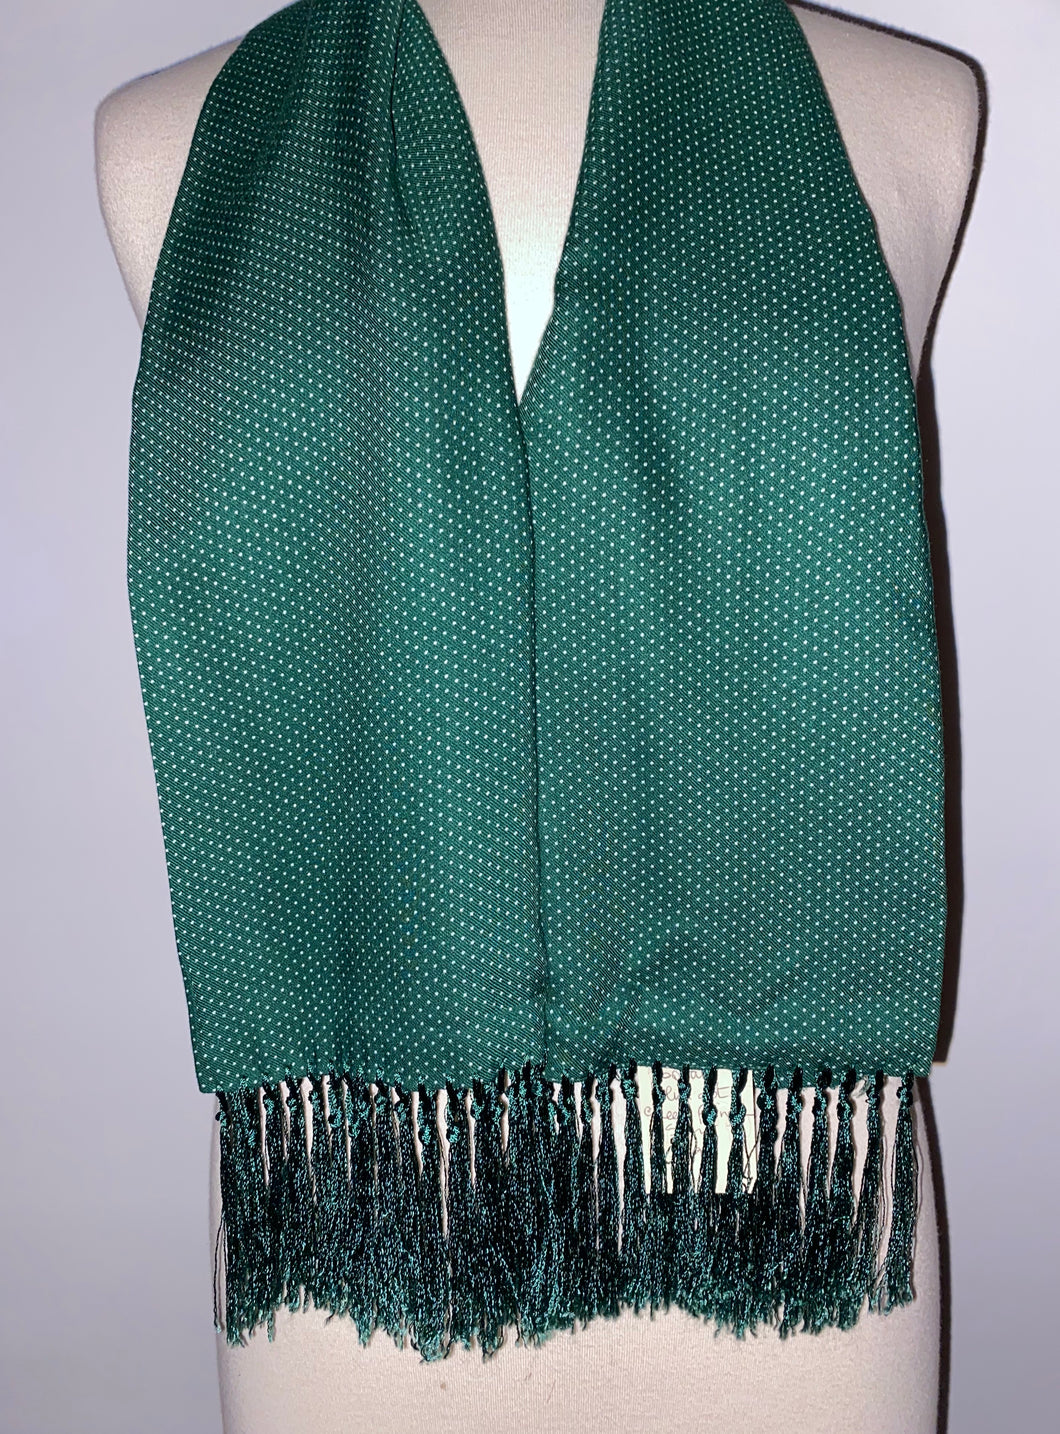 Tootal green polka dot tasselled scarf